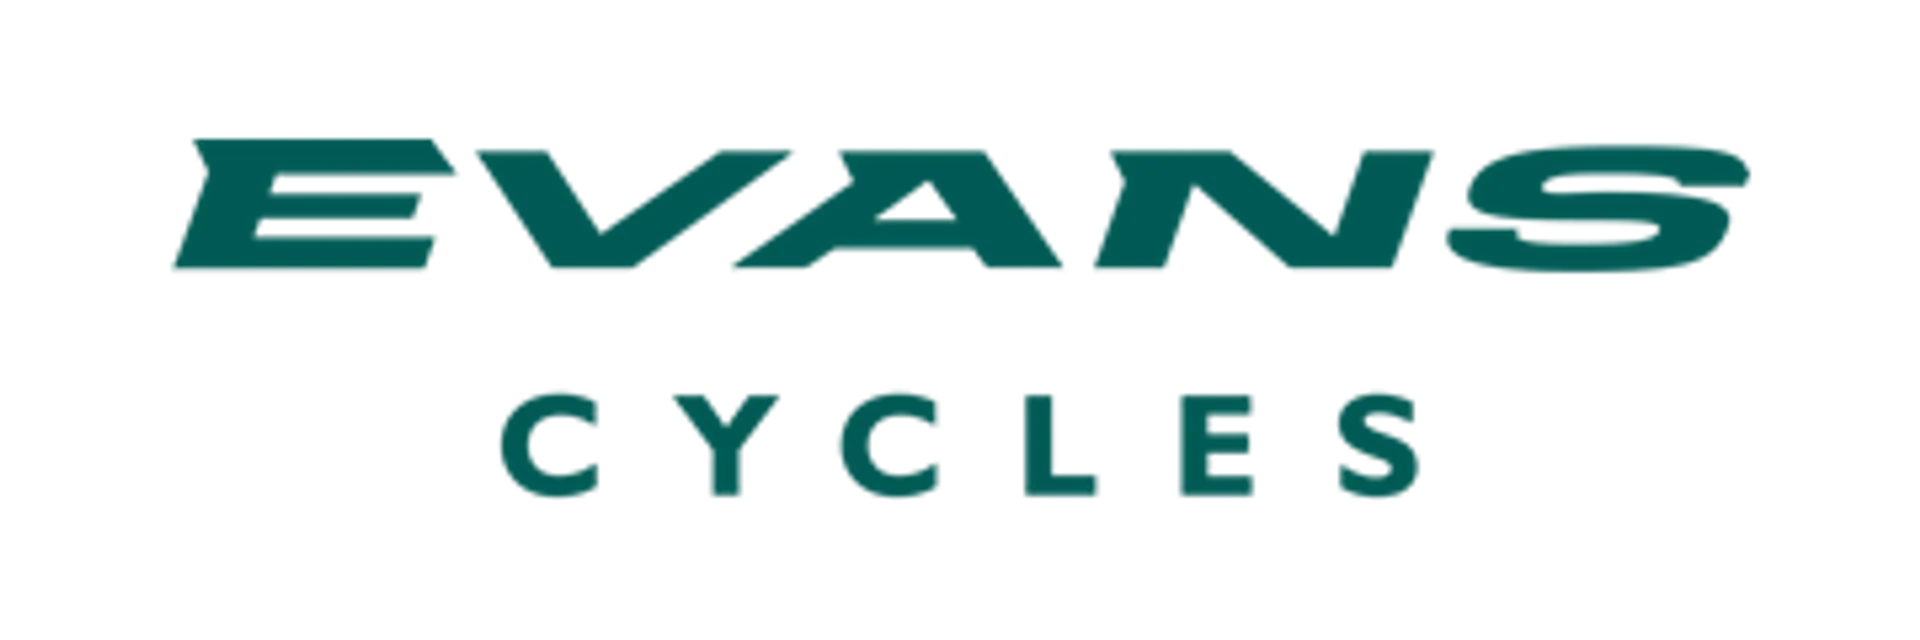 EVAN CYCLES logo